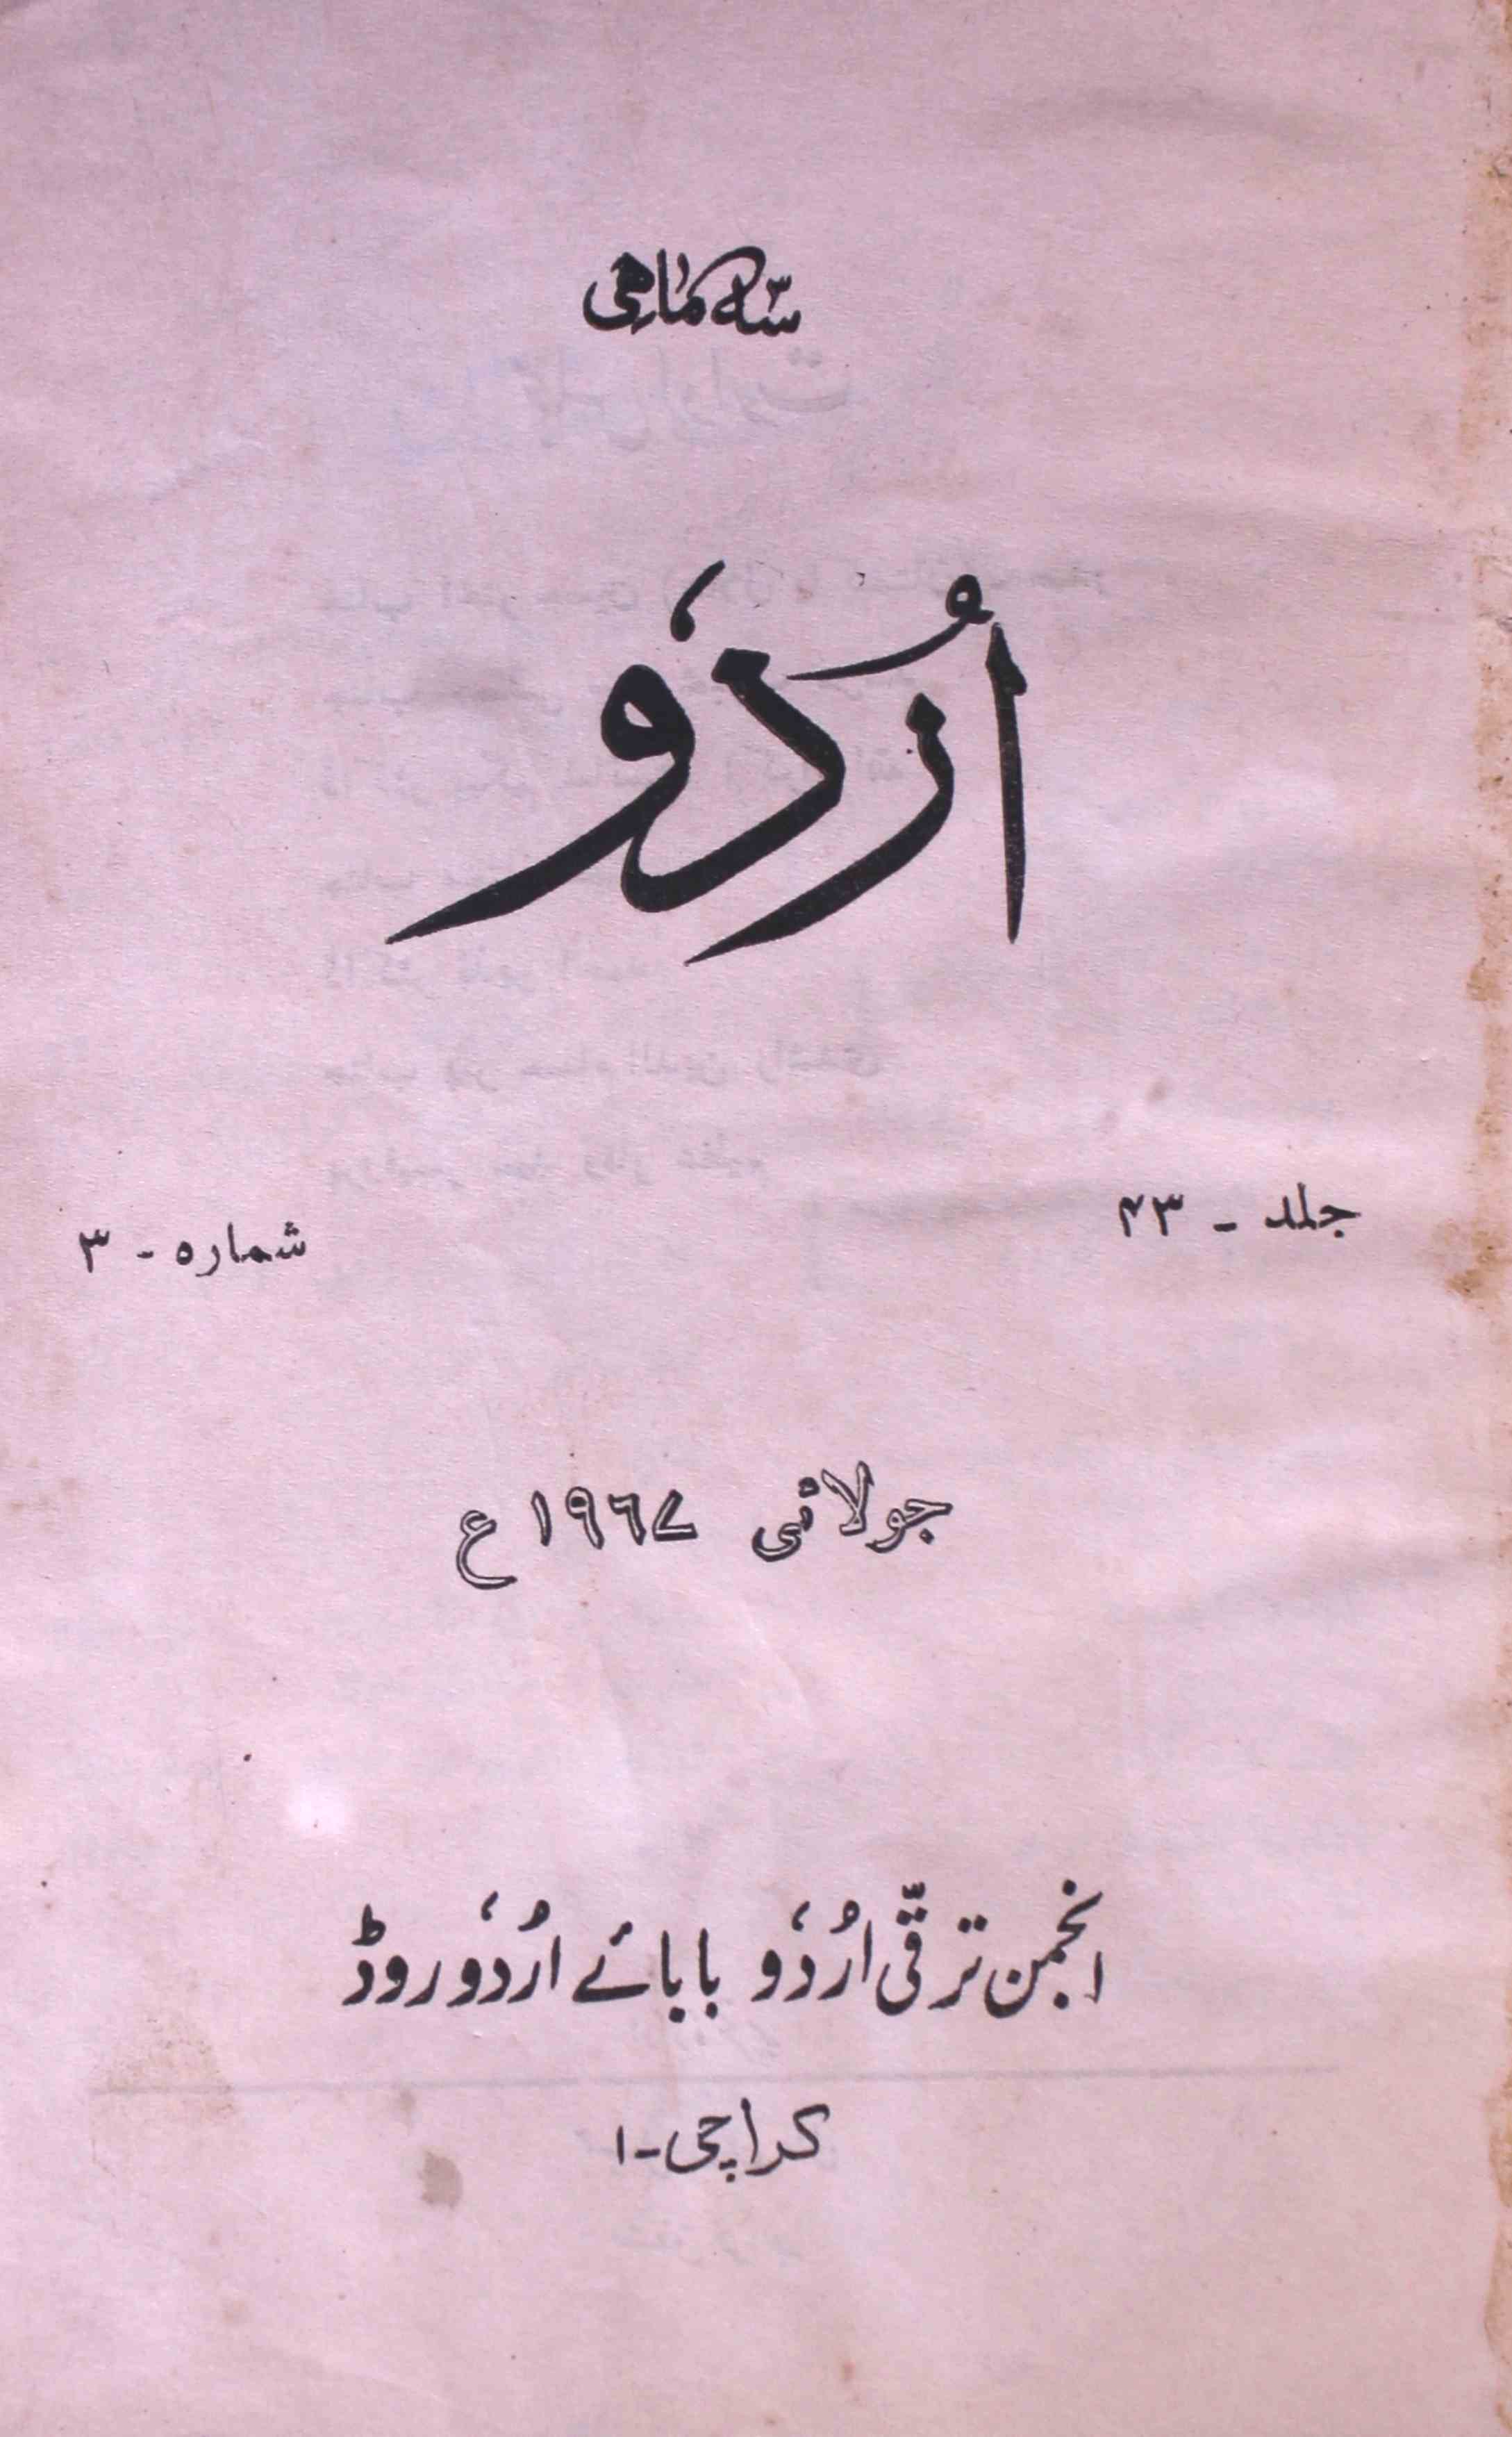 उर्दू